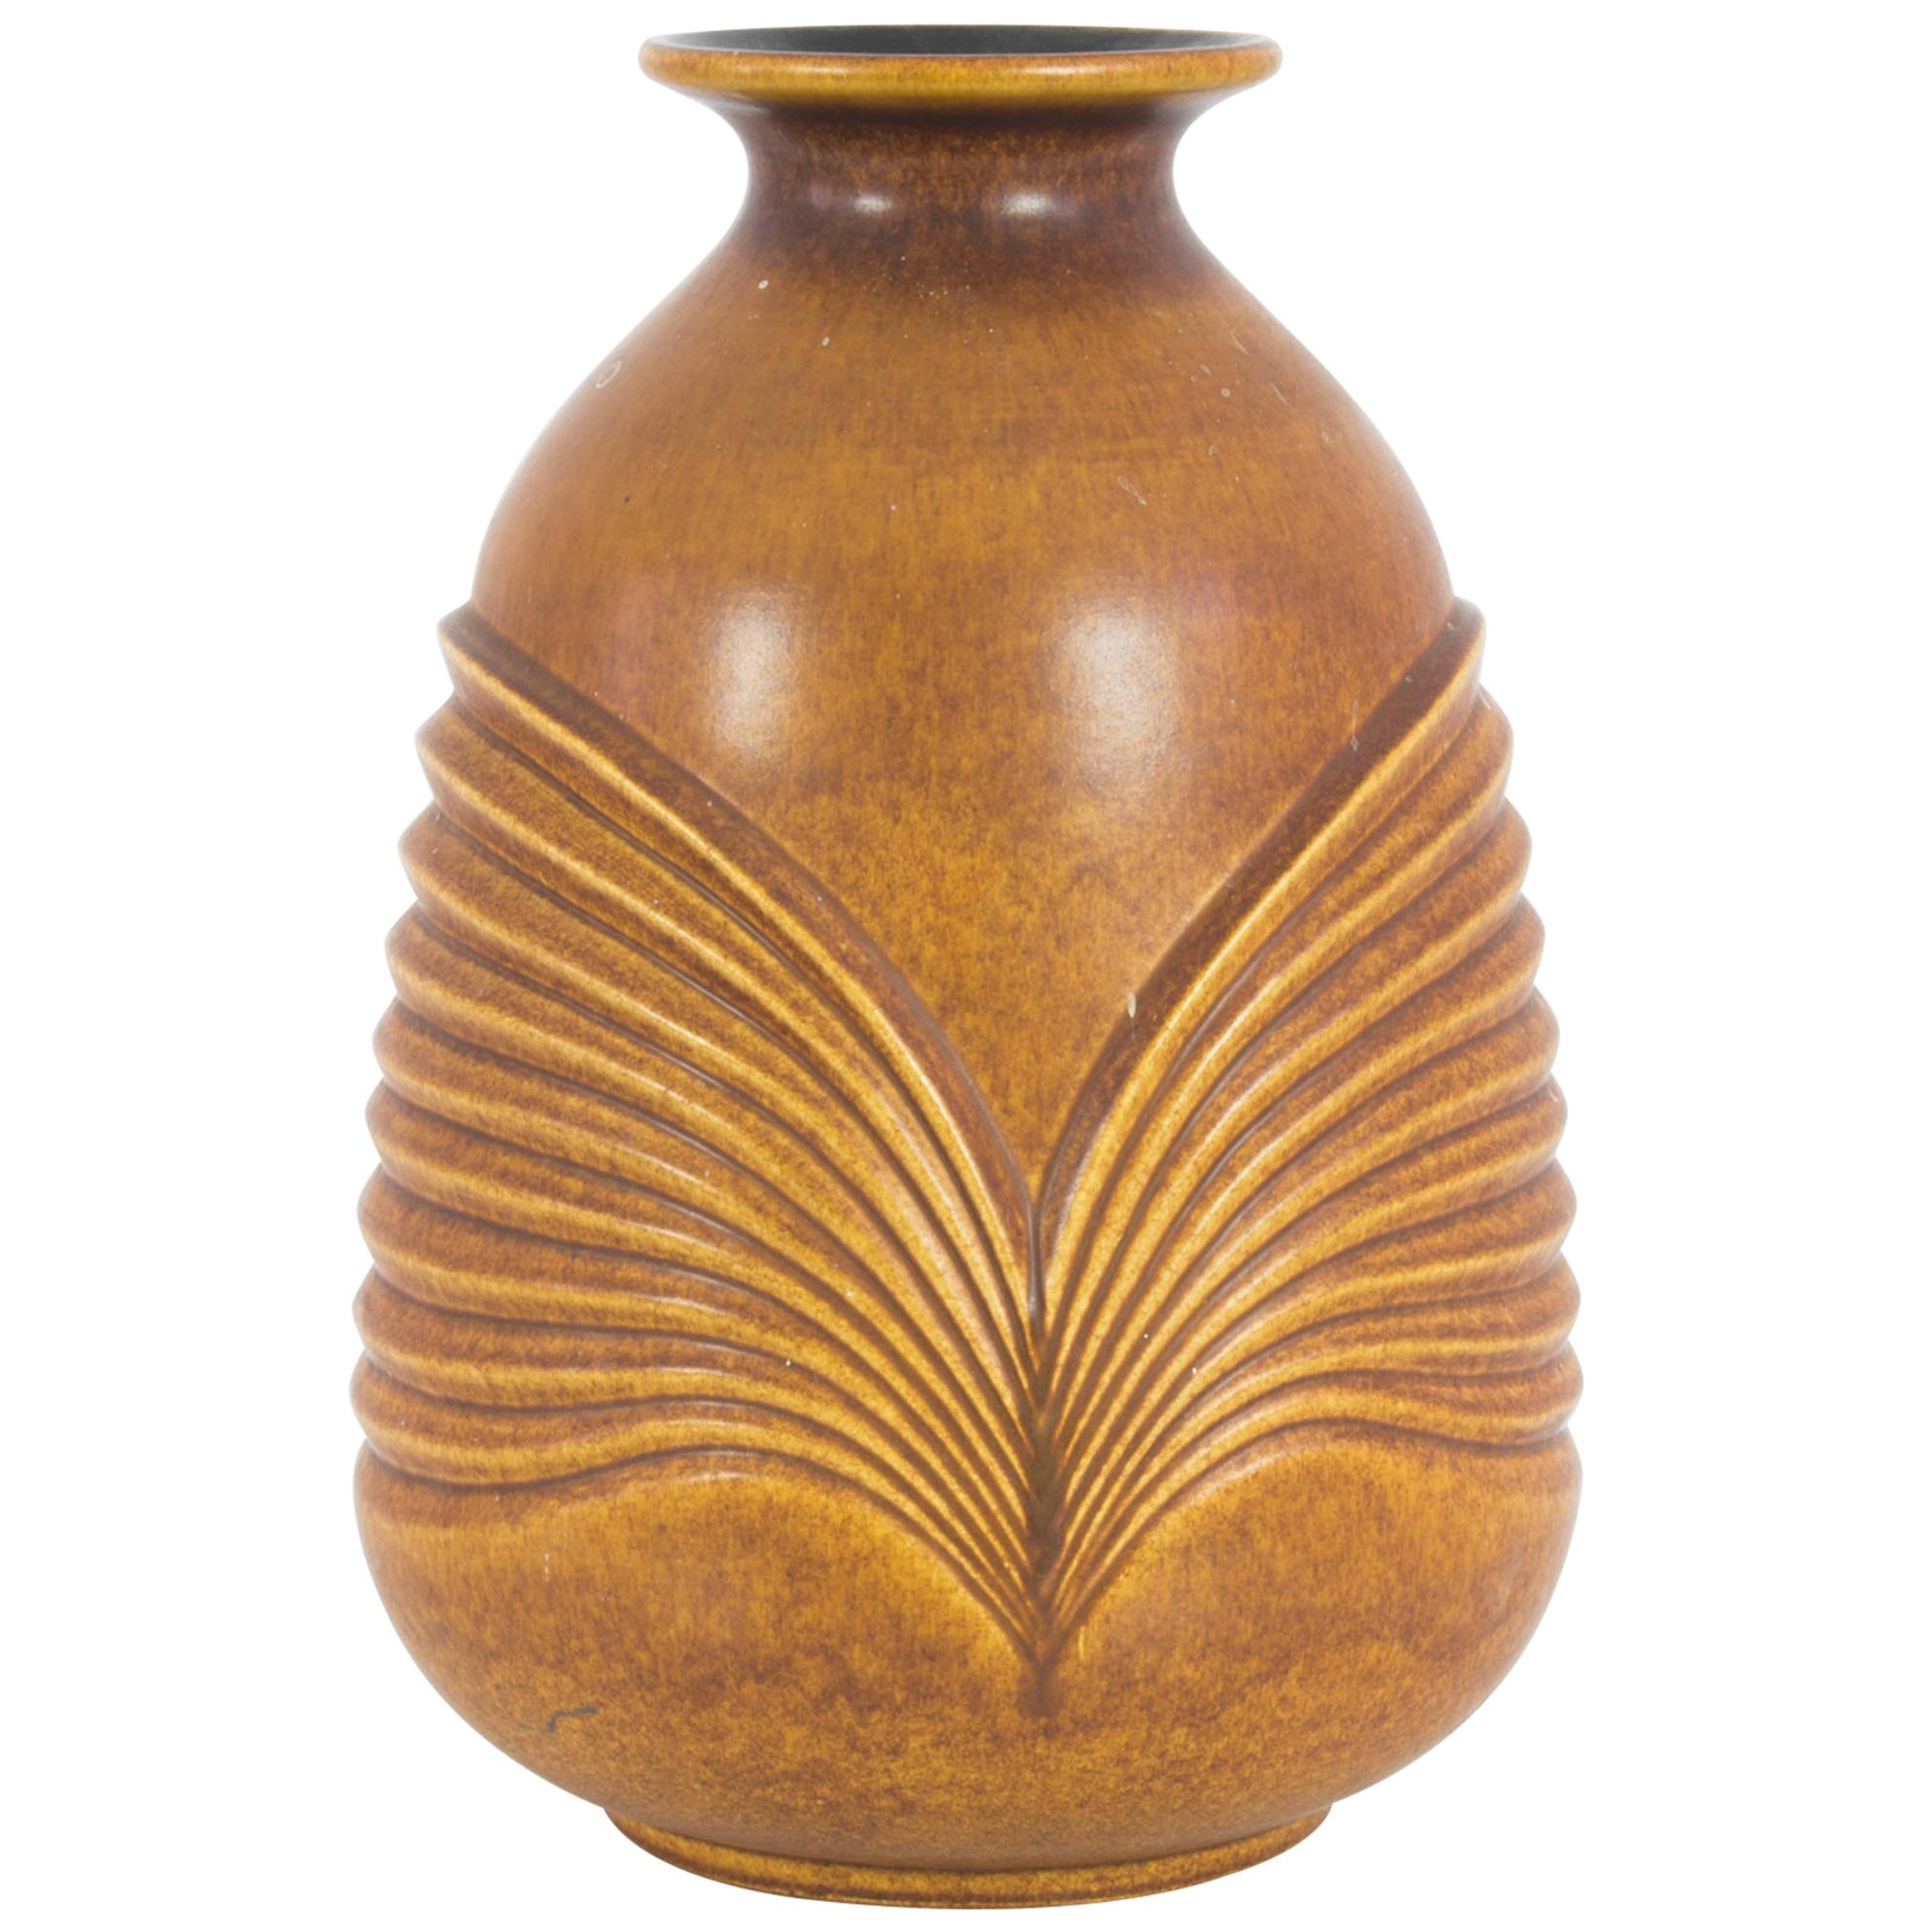 1960s “W. Germany” Ochre Wings Mid-Century Ceramic Vase